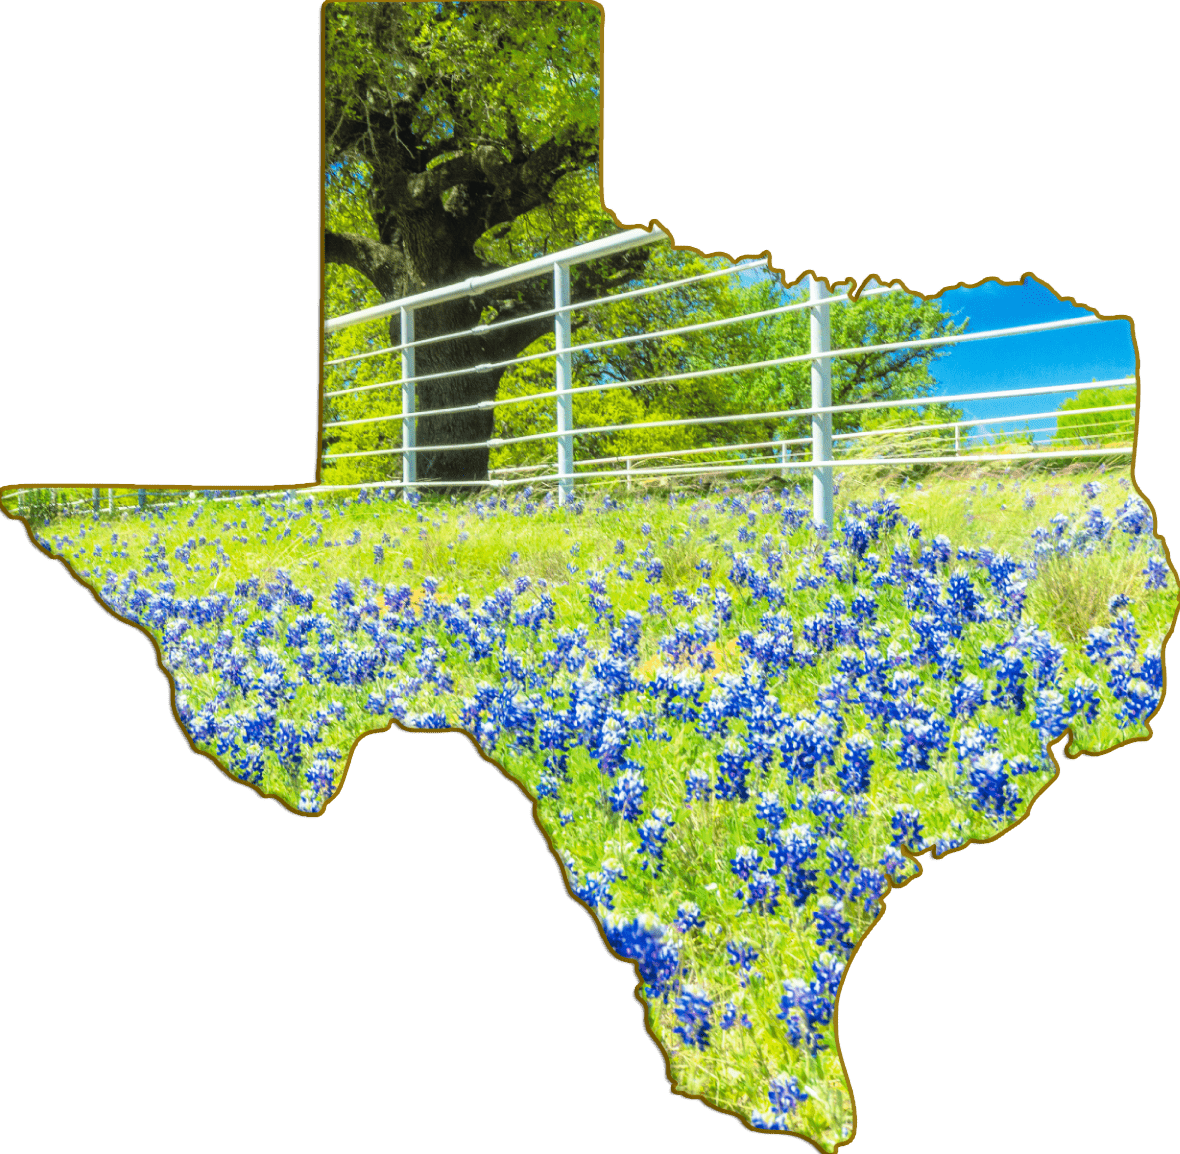 Wimberley Puzzle Company Refrigerator Magnets Texas Roadside Bluebonnet Field | Texas-Shaped Magnet